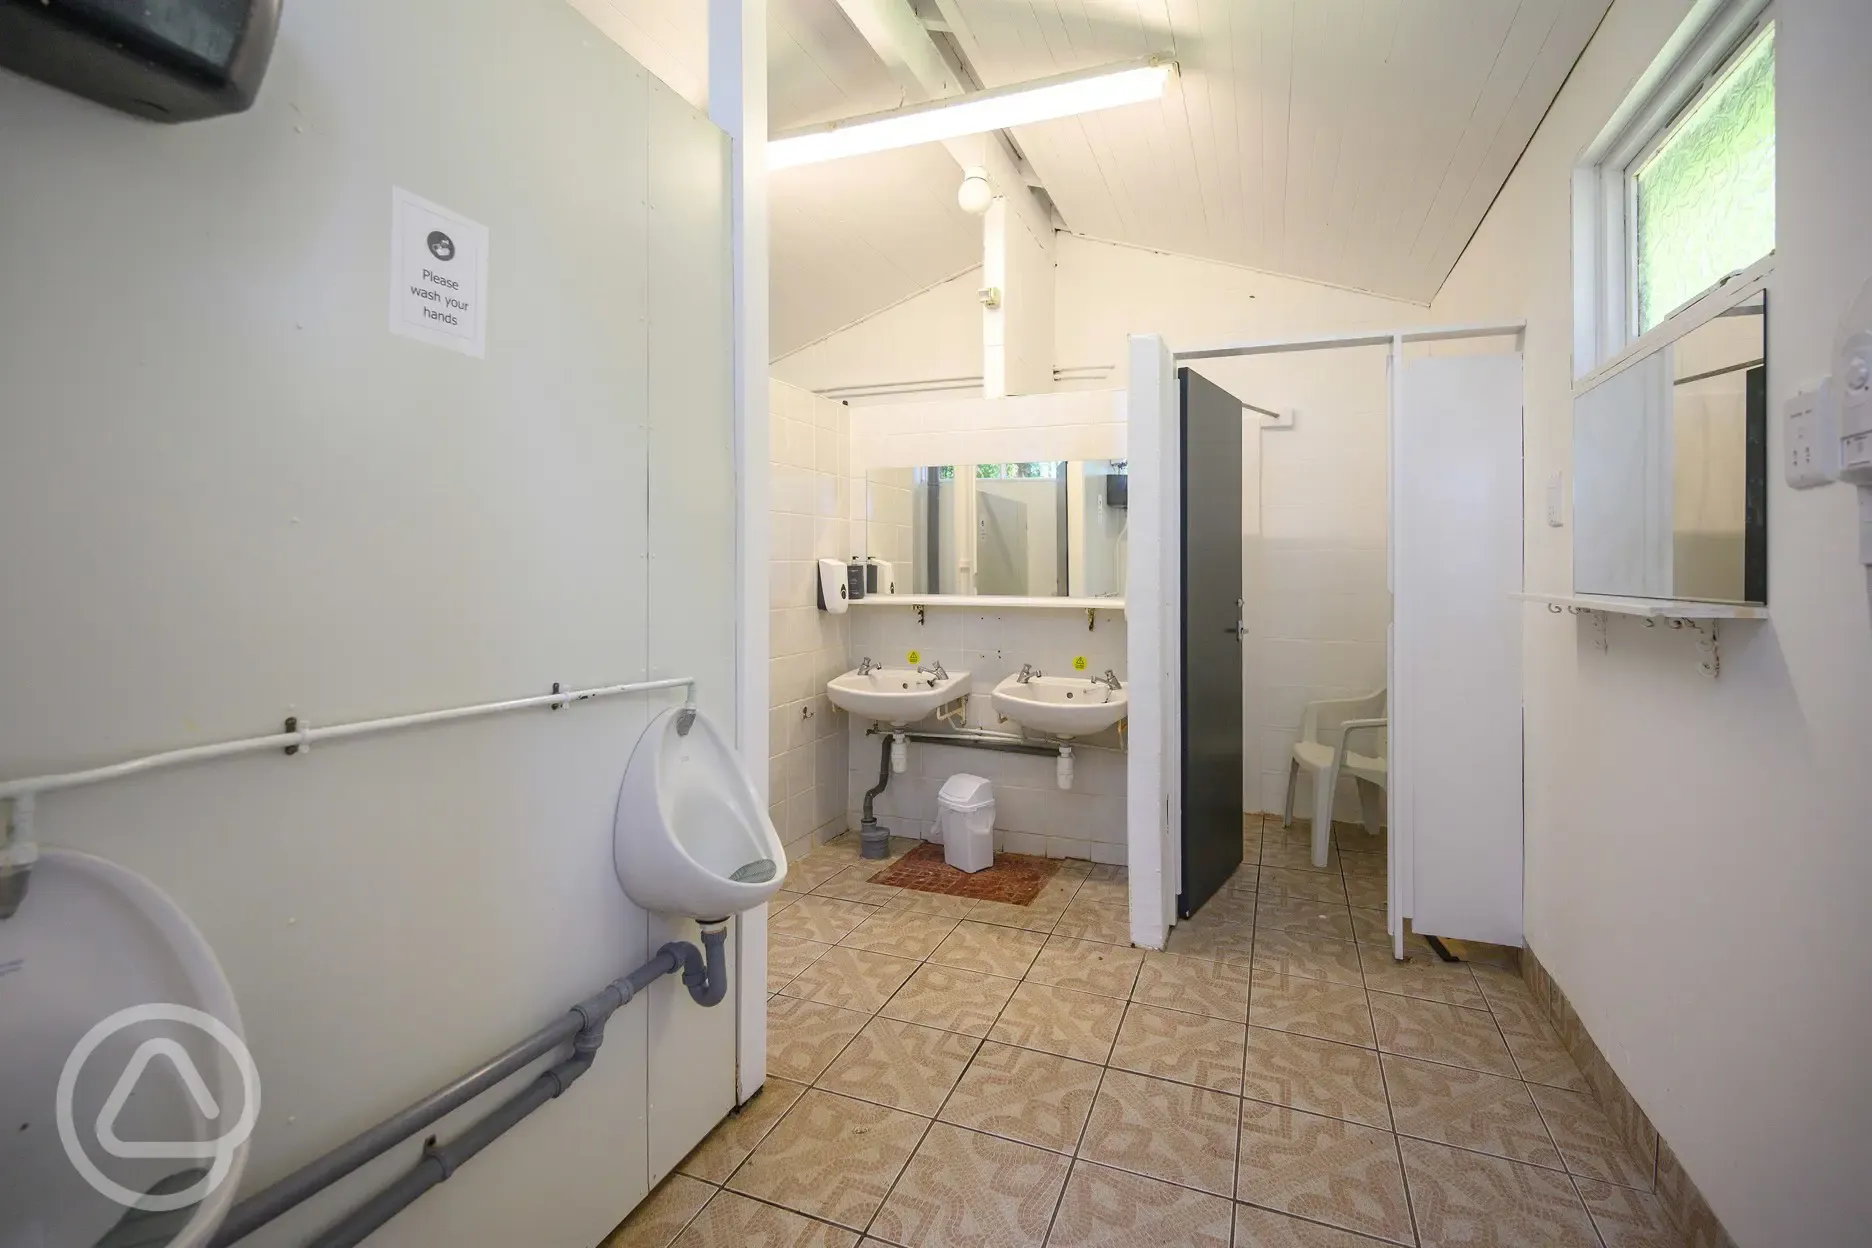 Communal mens toilets